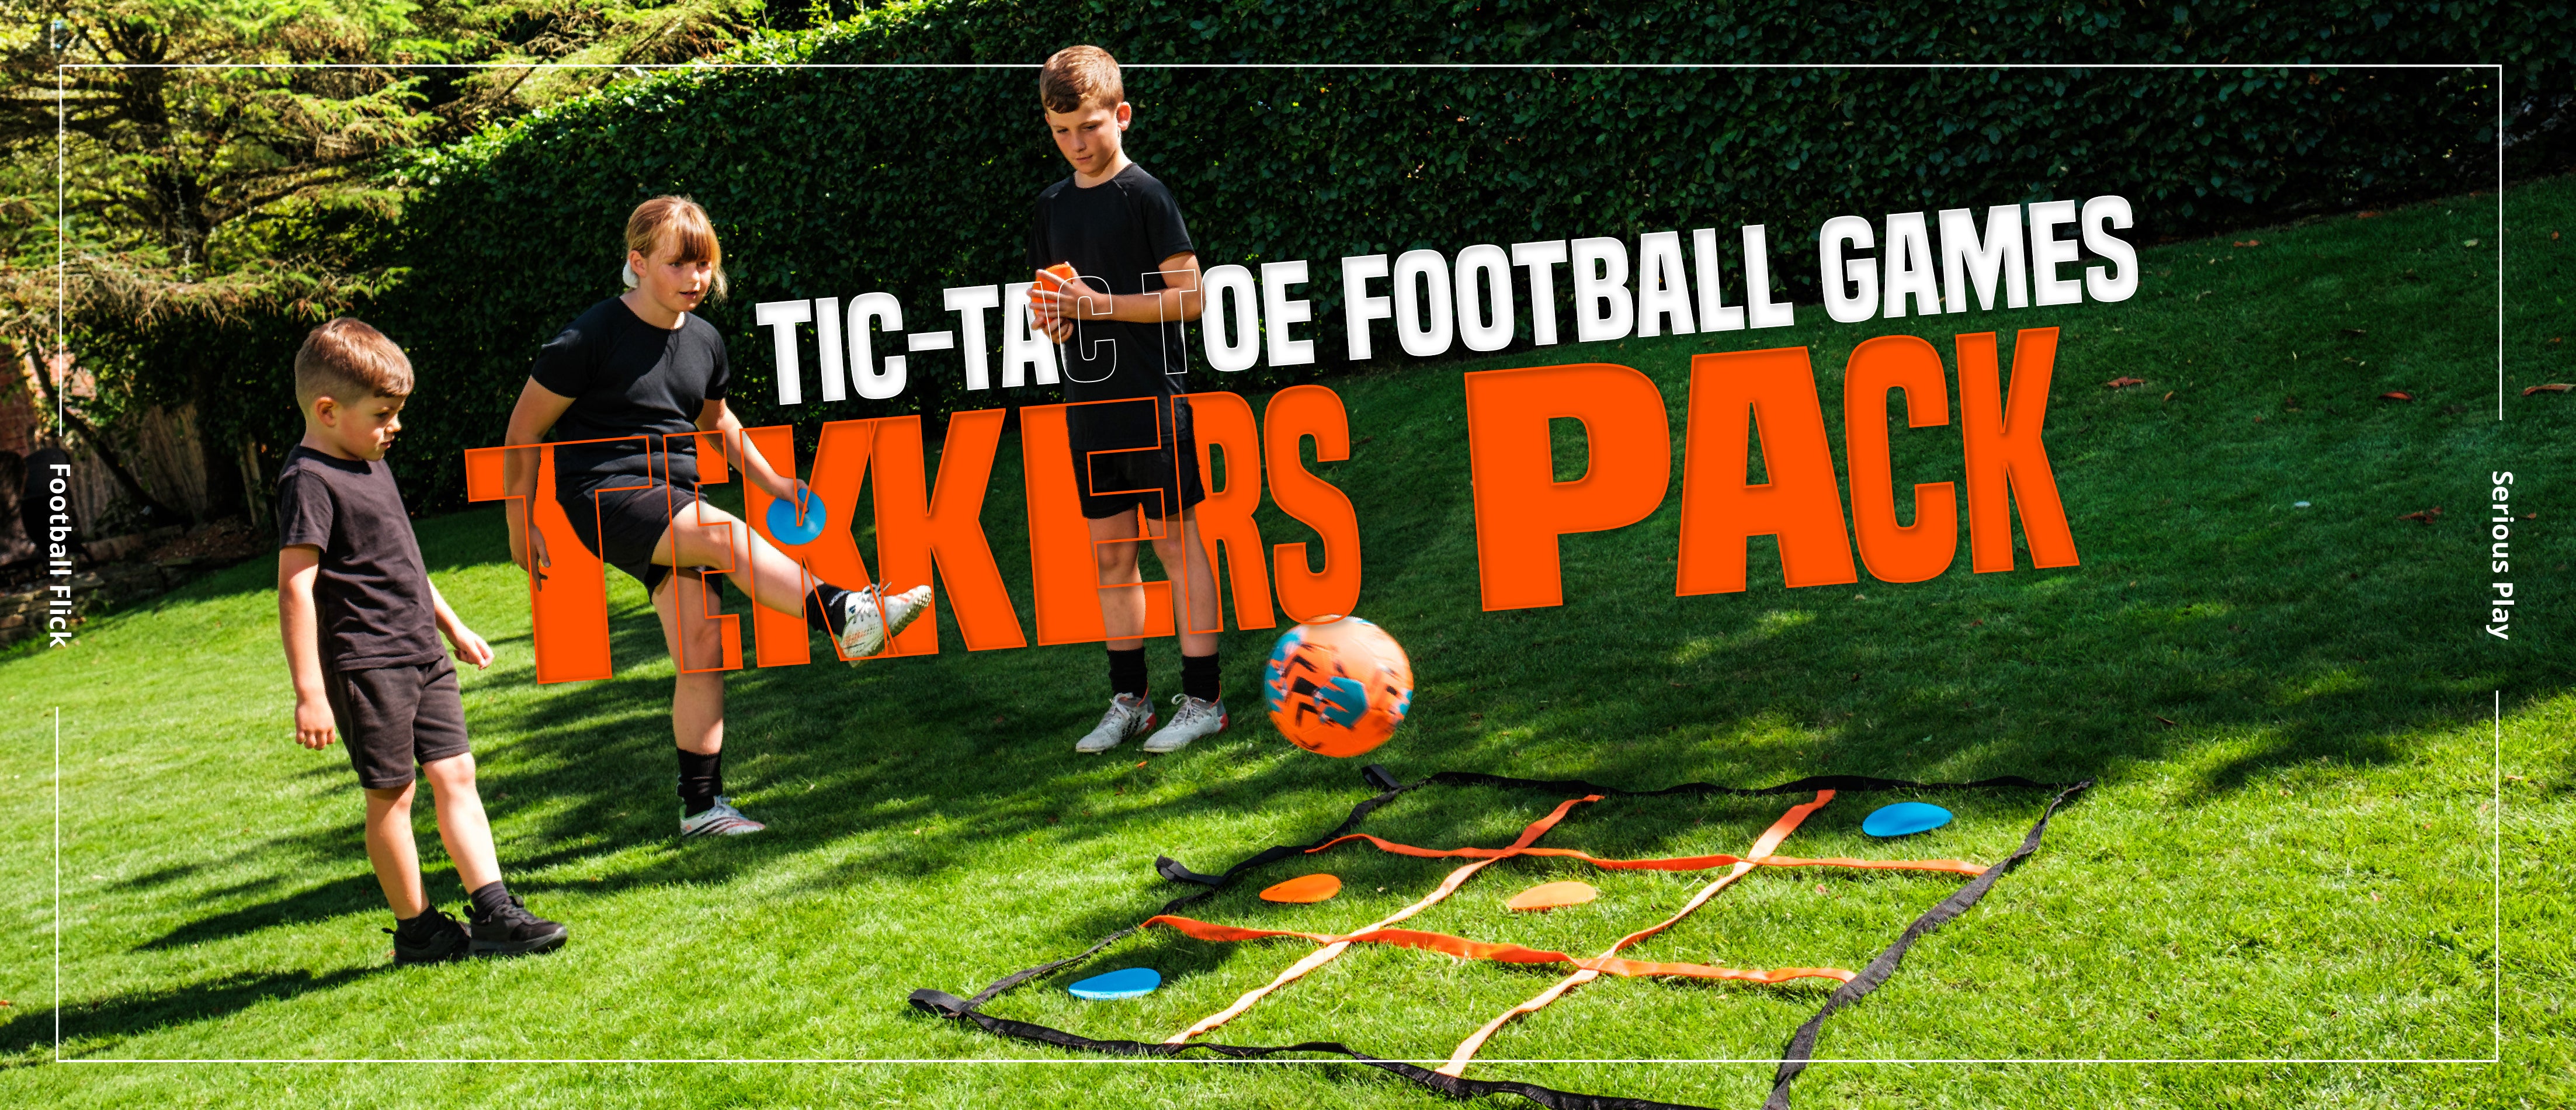 Tic tac toe football Free Download